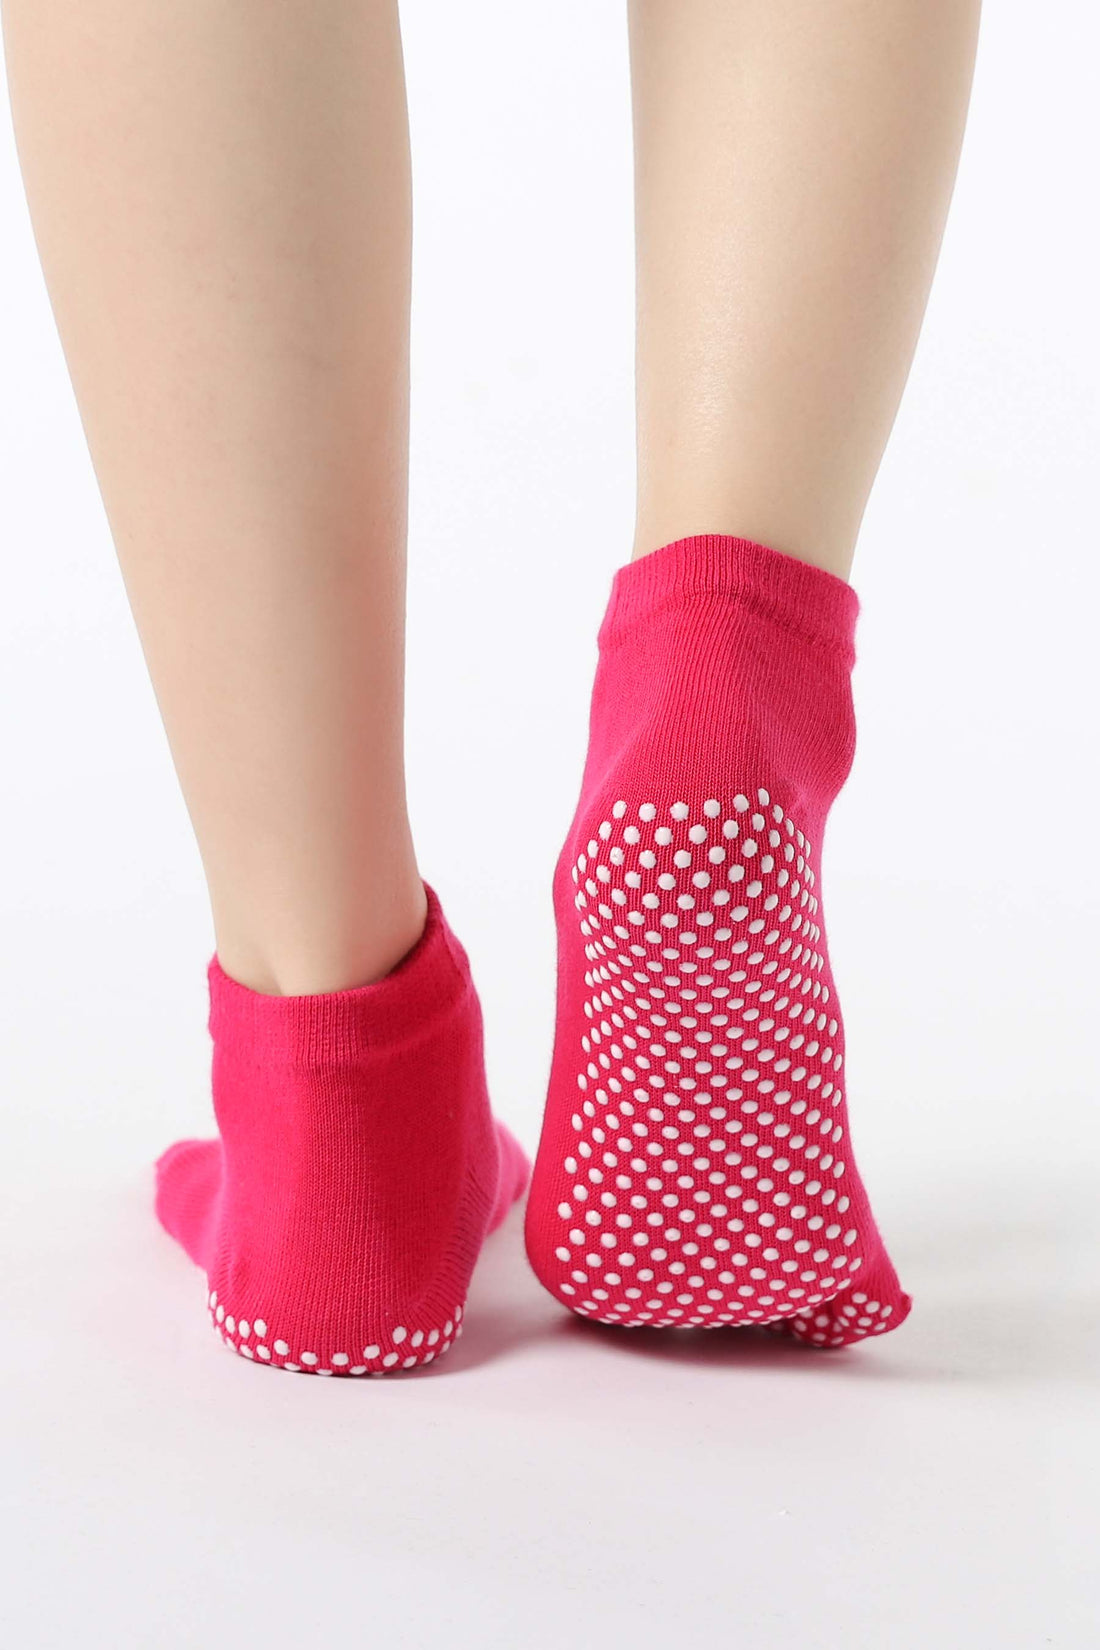 Kitty Footpads Yoga Sock